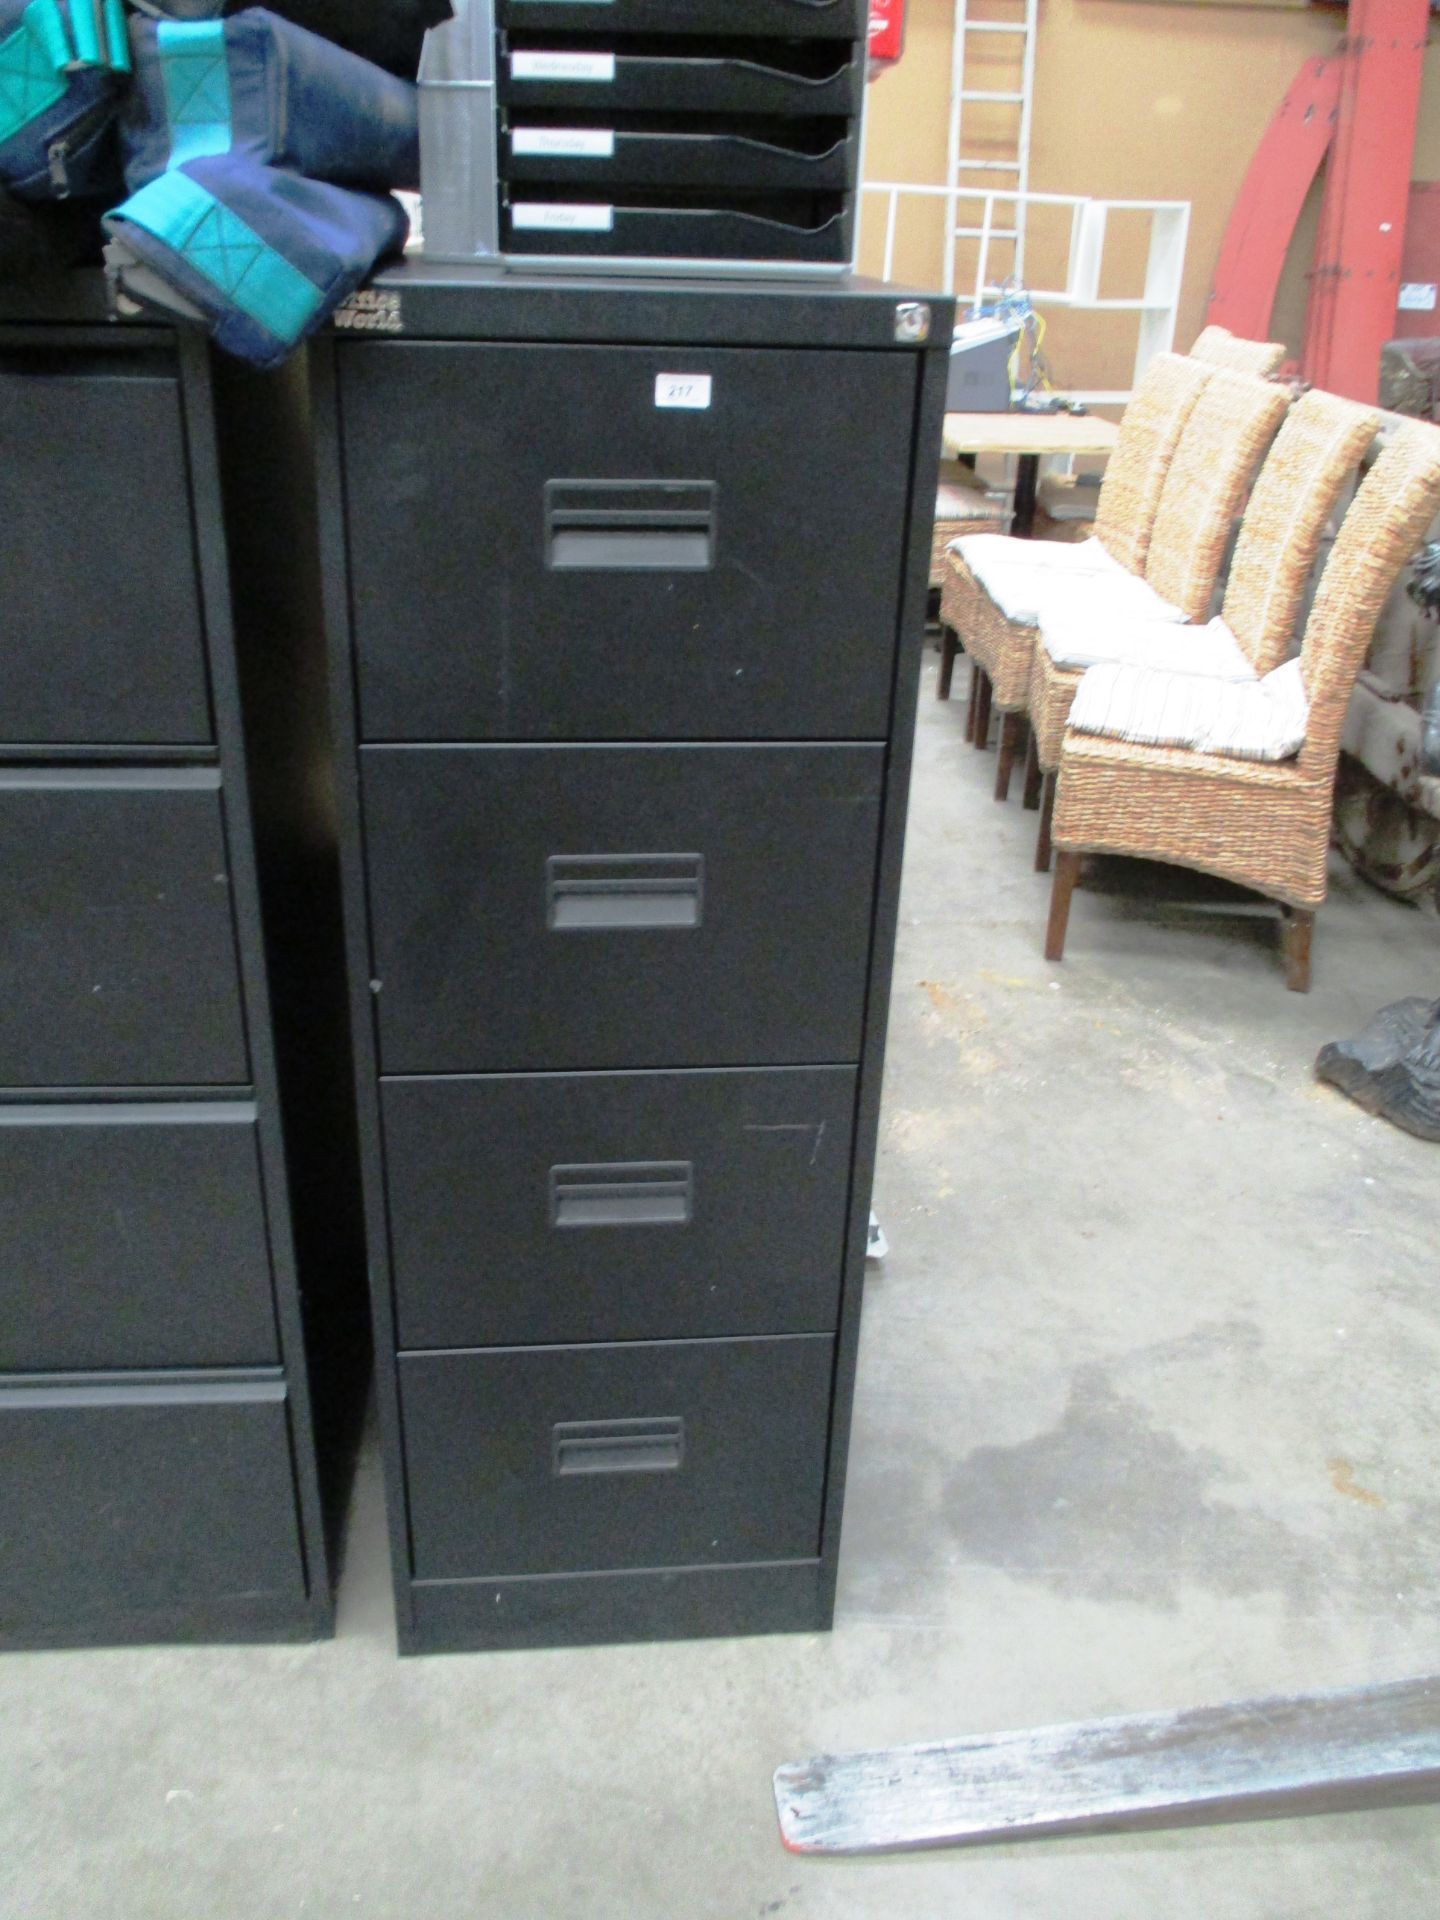 A black metal four drawer filing cabinet (unlocked no key)